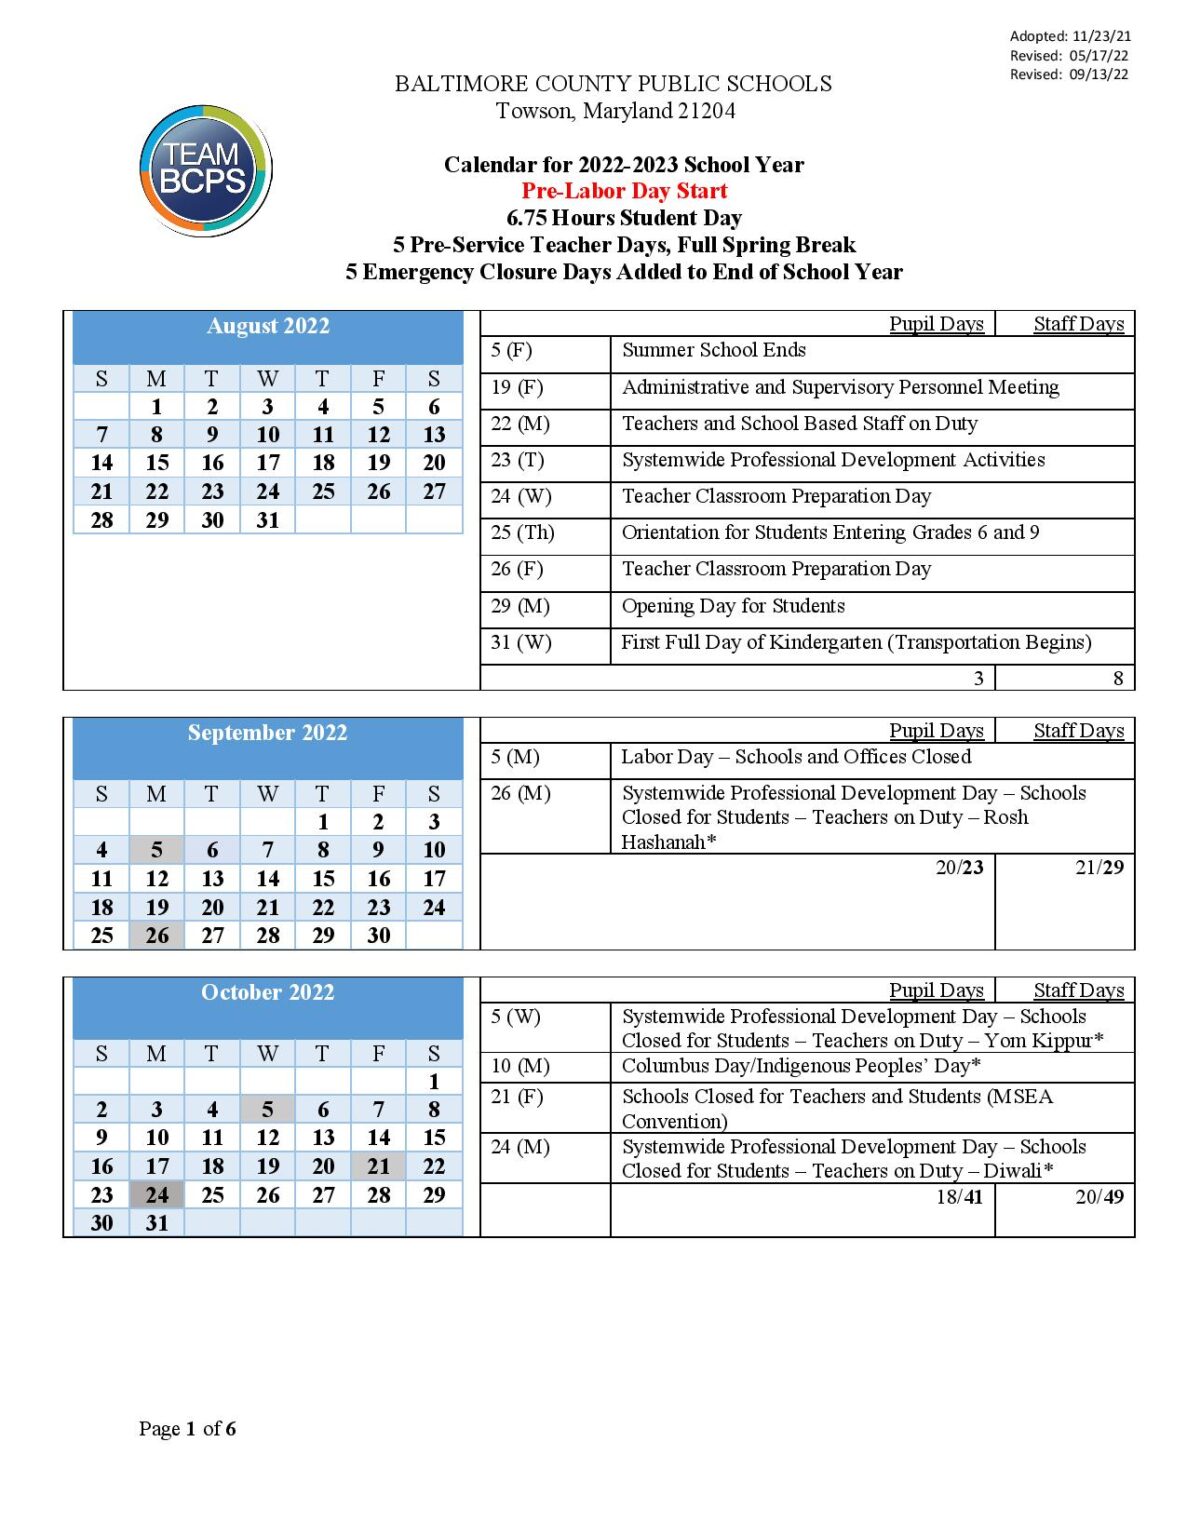 Baltimore County Public Schools Calendar Holidays 2022-2023